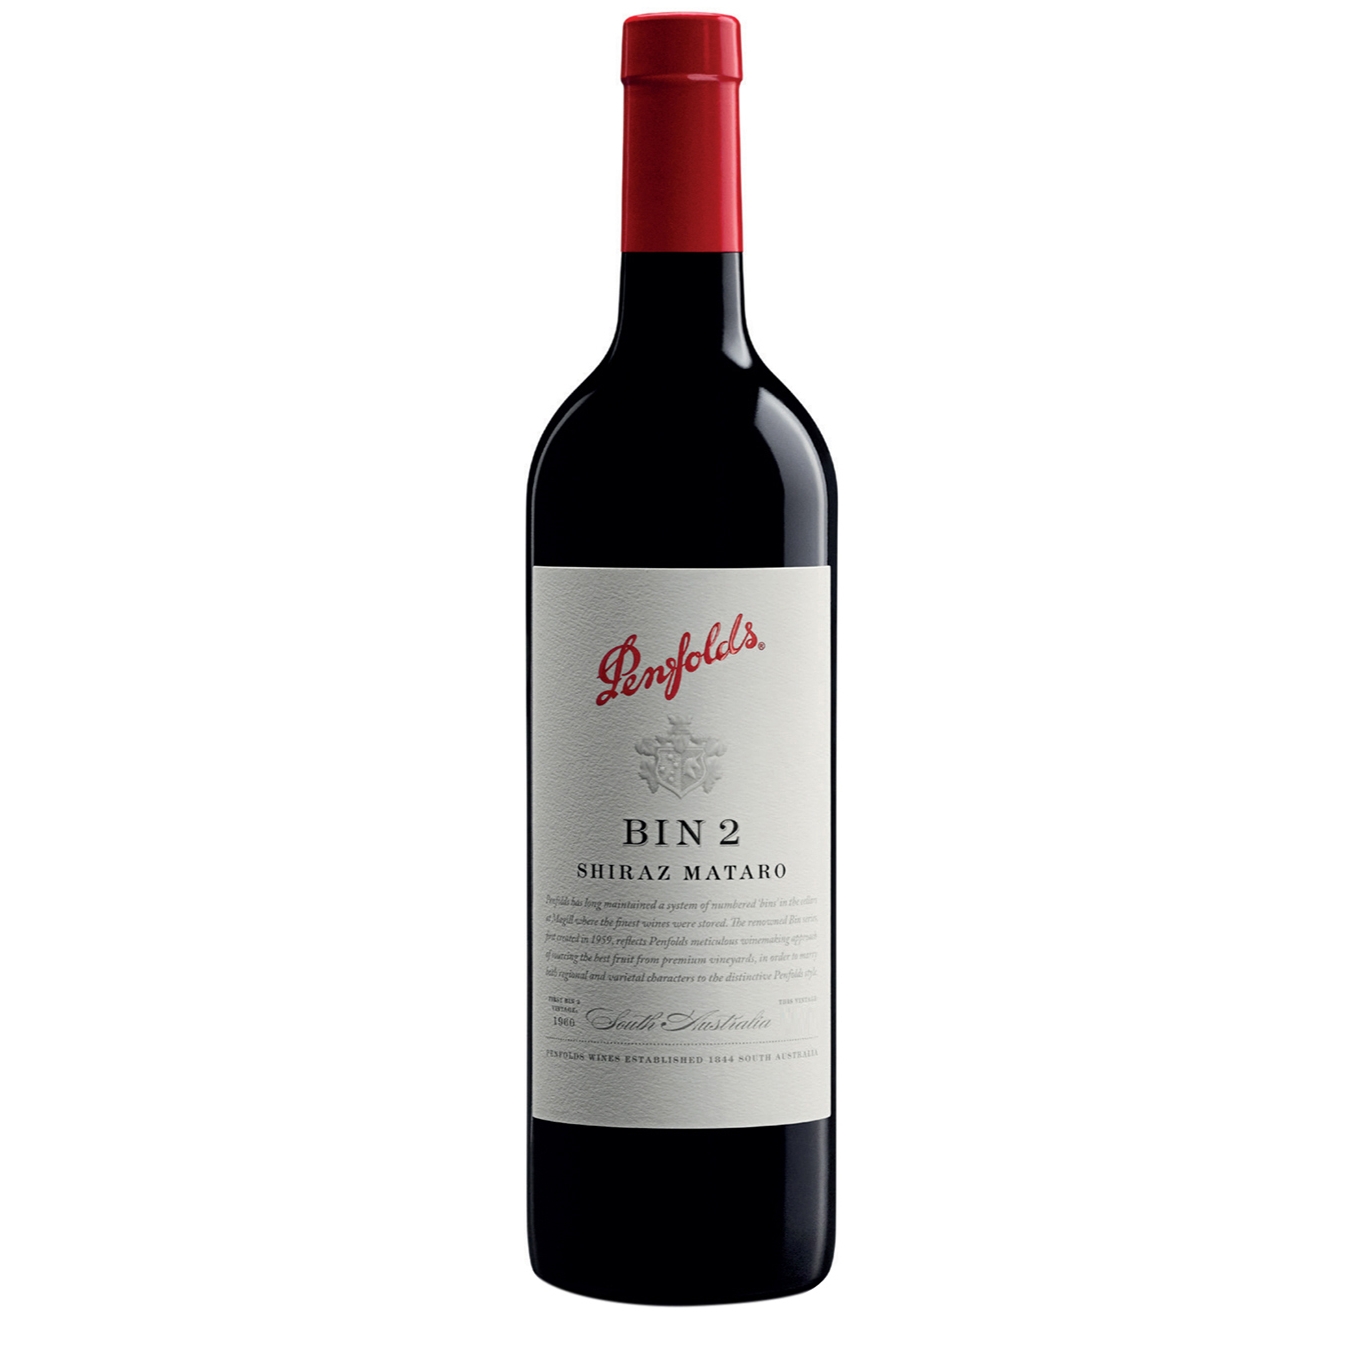 Penfolds Bin 2 Shiraz Mataro 2019 Red Wine